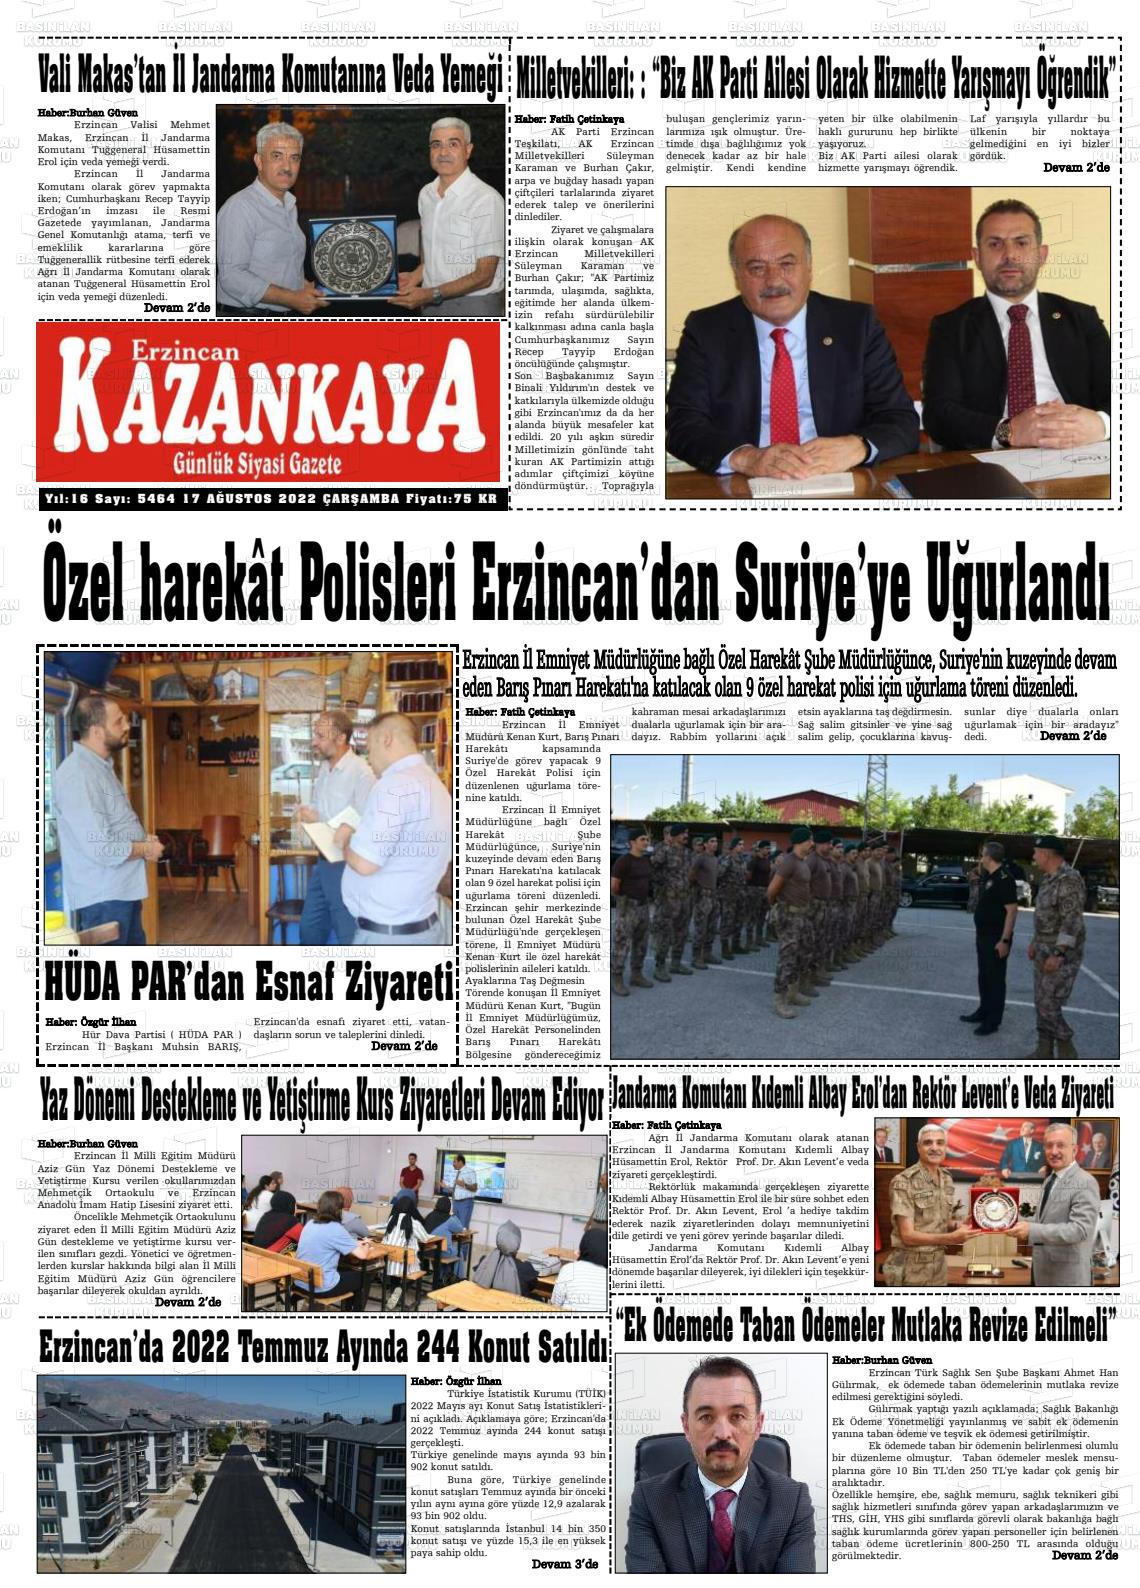 17 Ağustos 2022 Kazankaya Gazete Manşeti